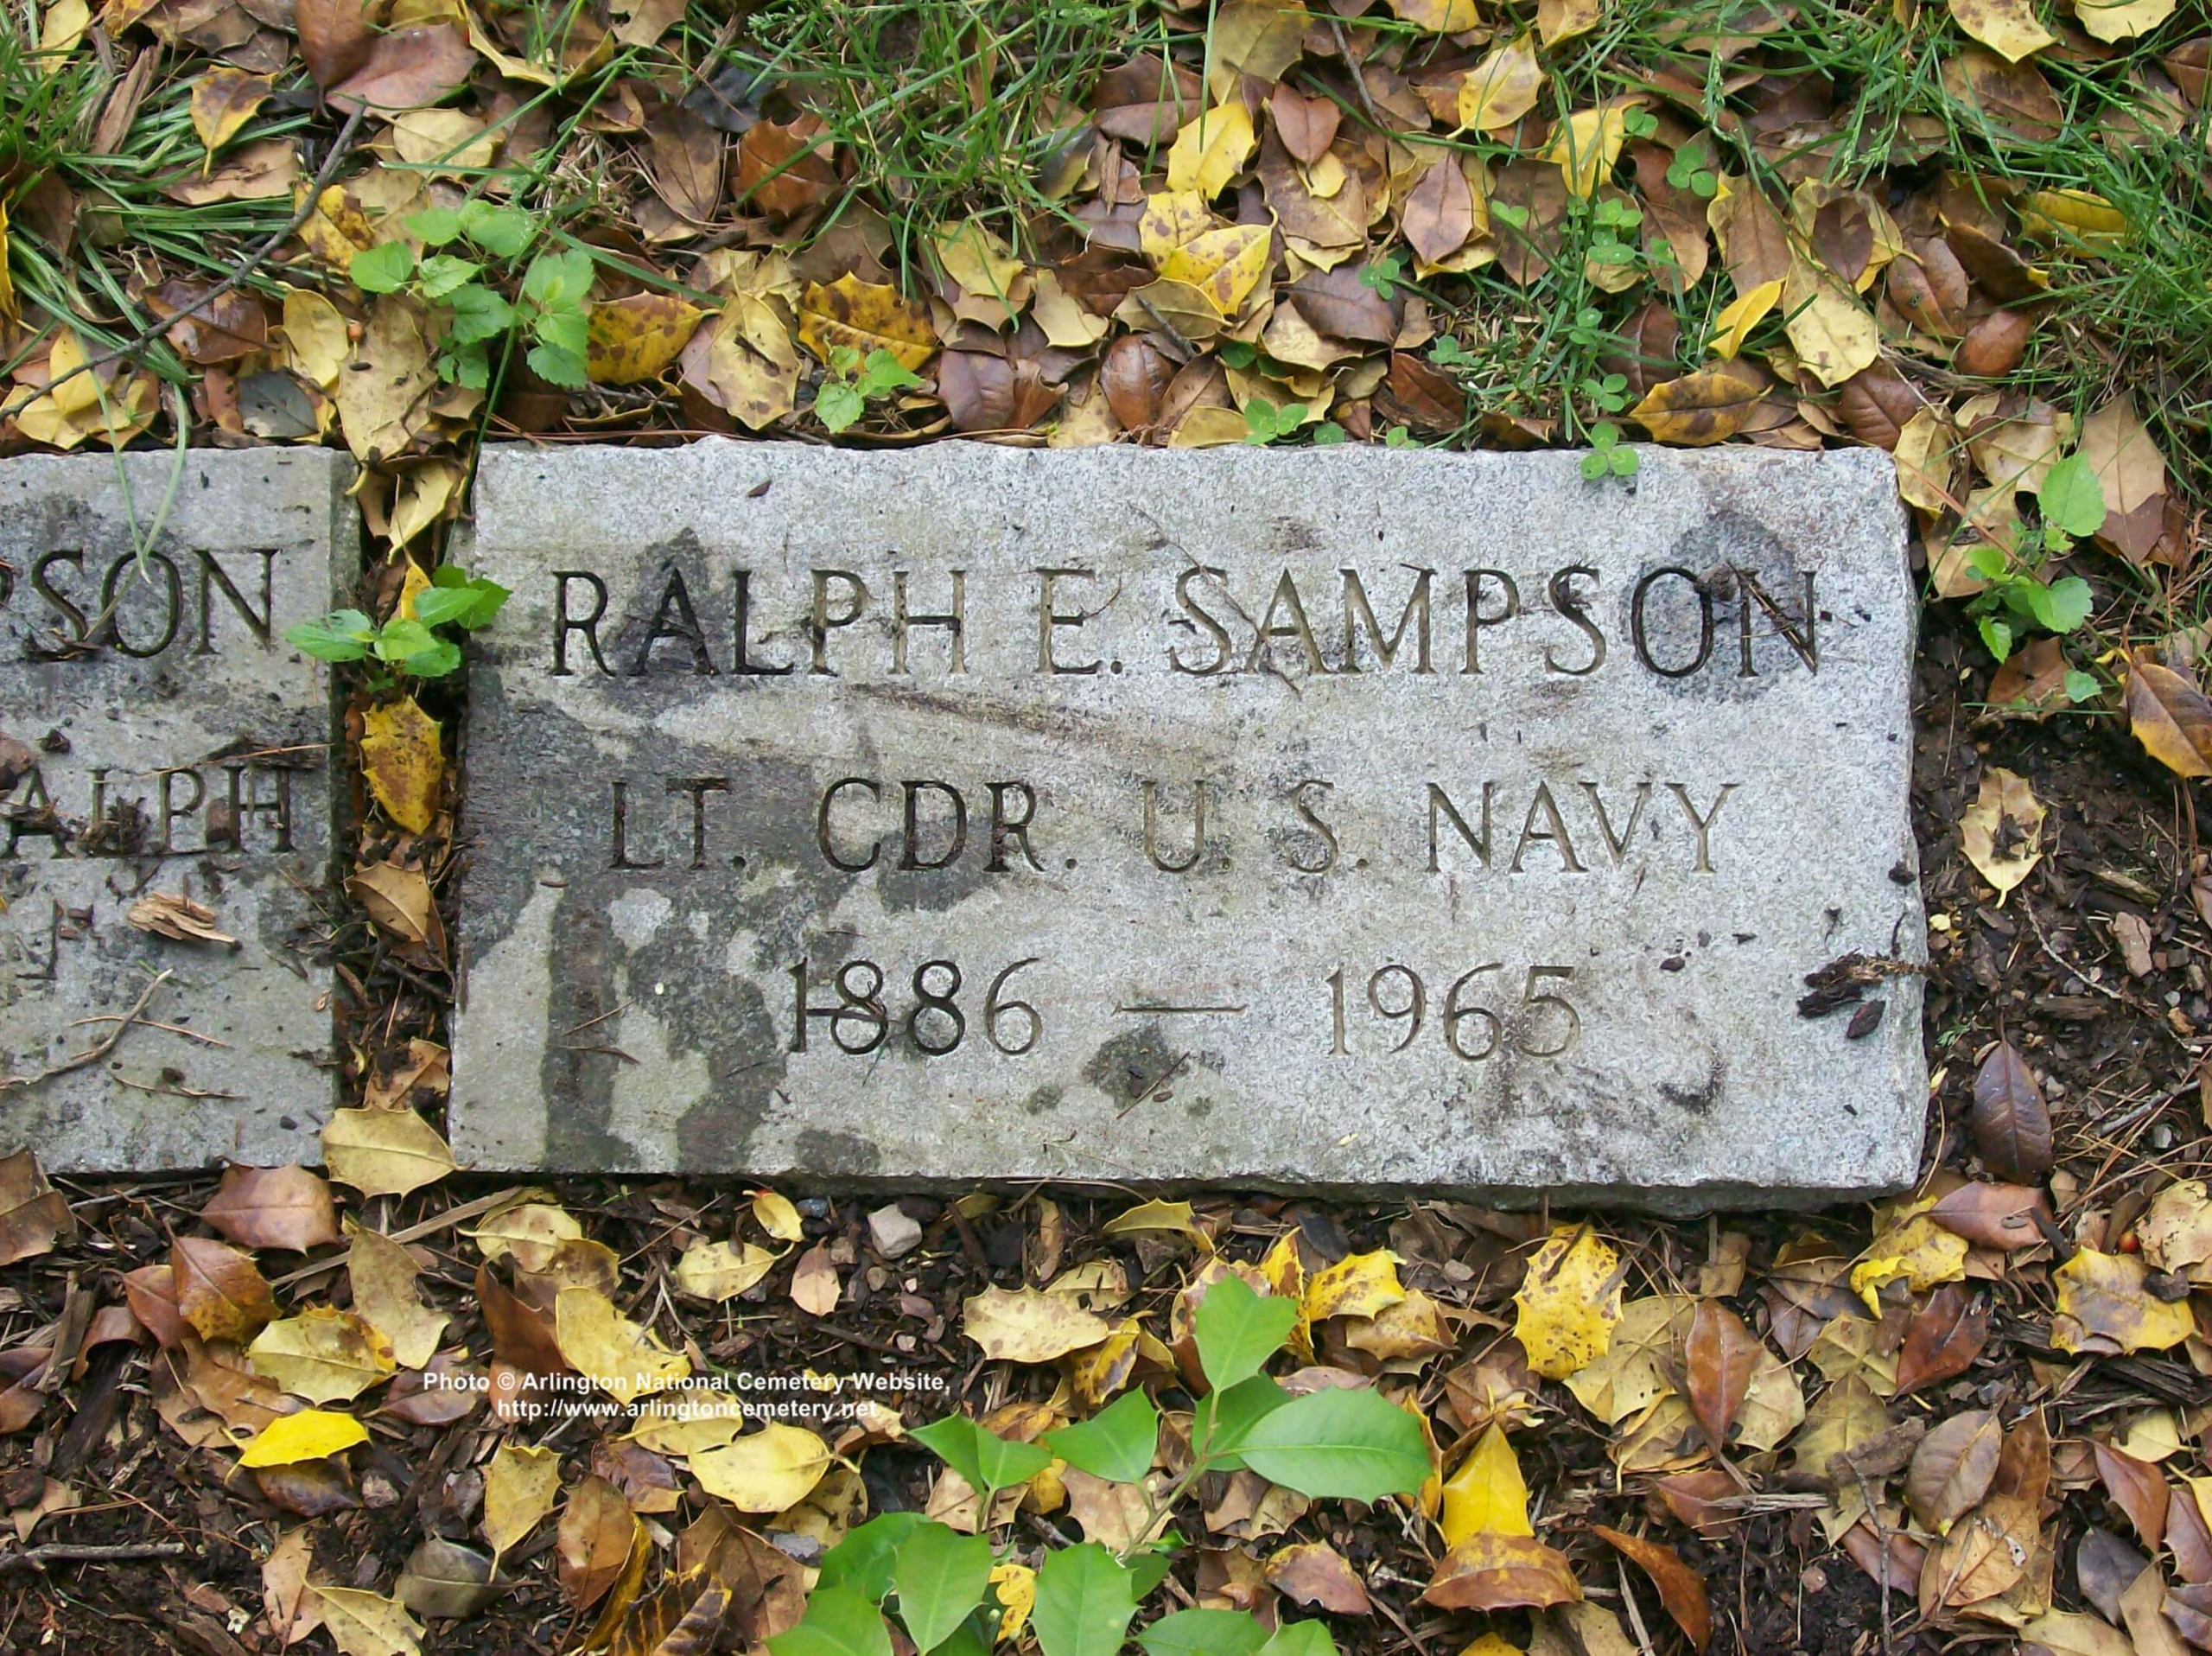 resampson-gravesite-photo-may-2008-001